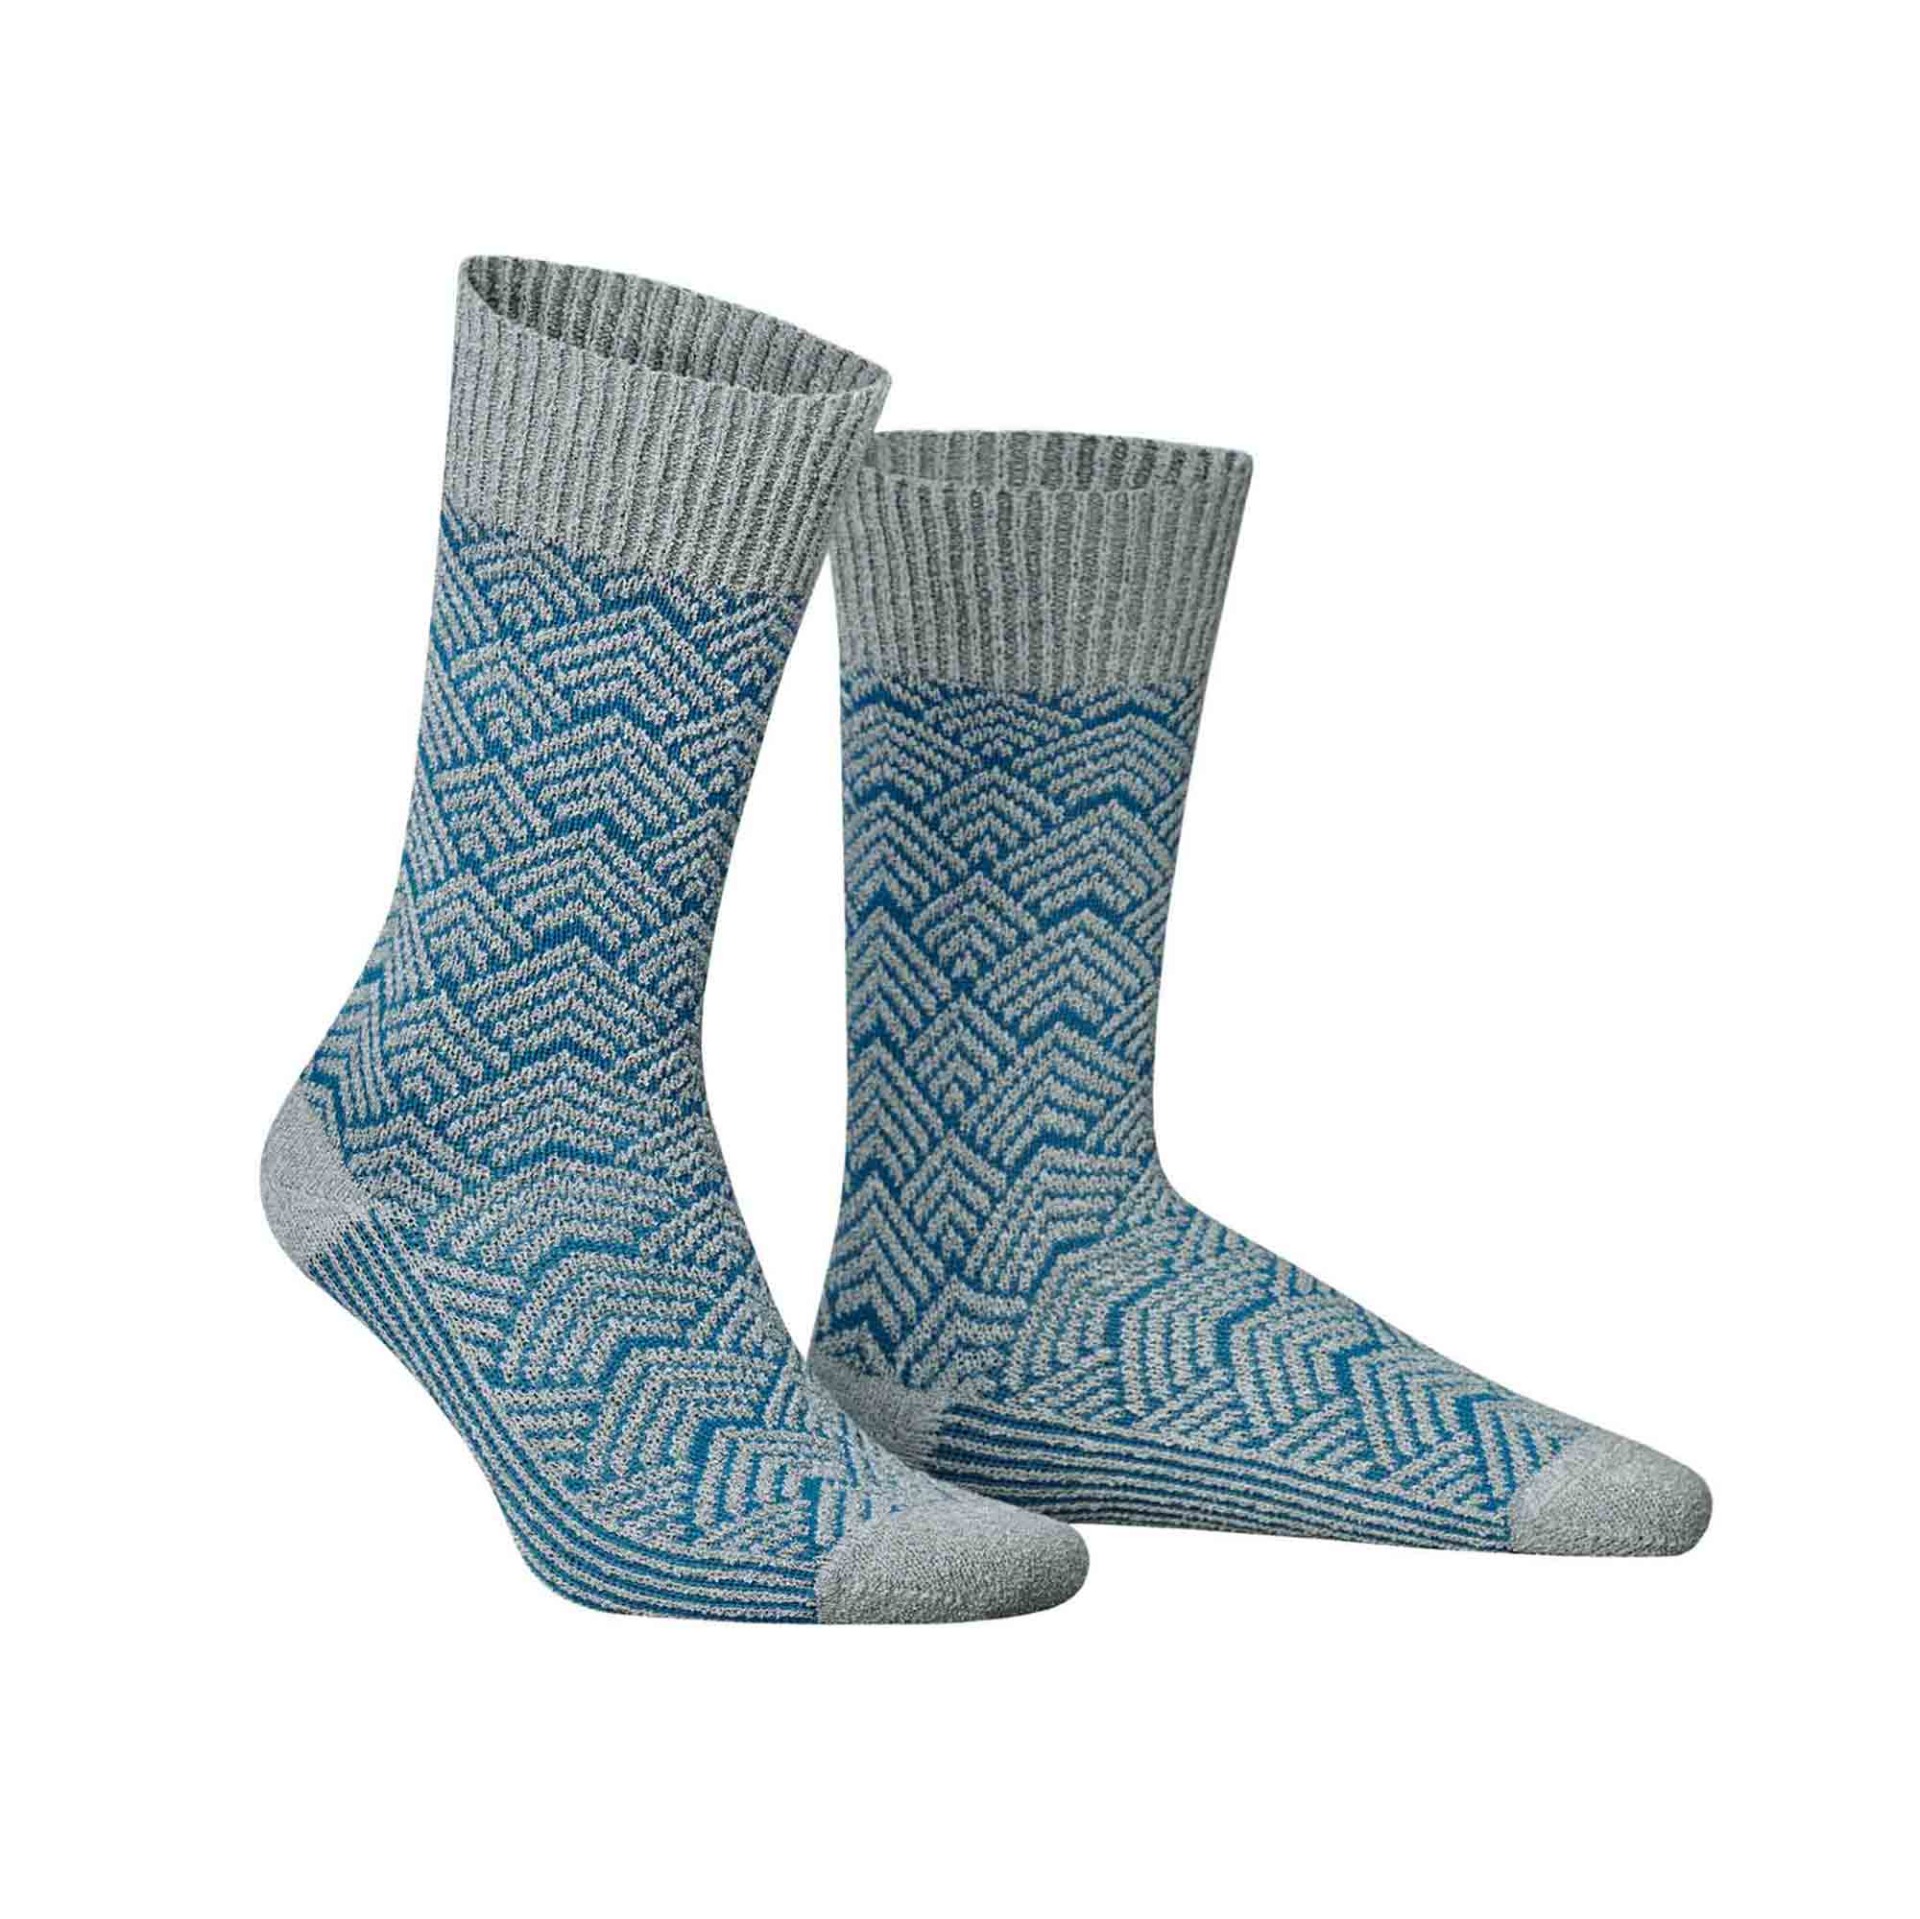 HUDSON Herren RARE -  39/42 - Socken mit coolem Retro-Muster - Silber (Grau)